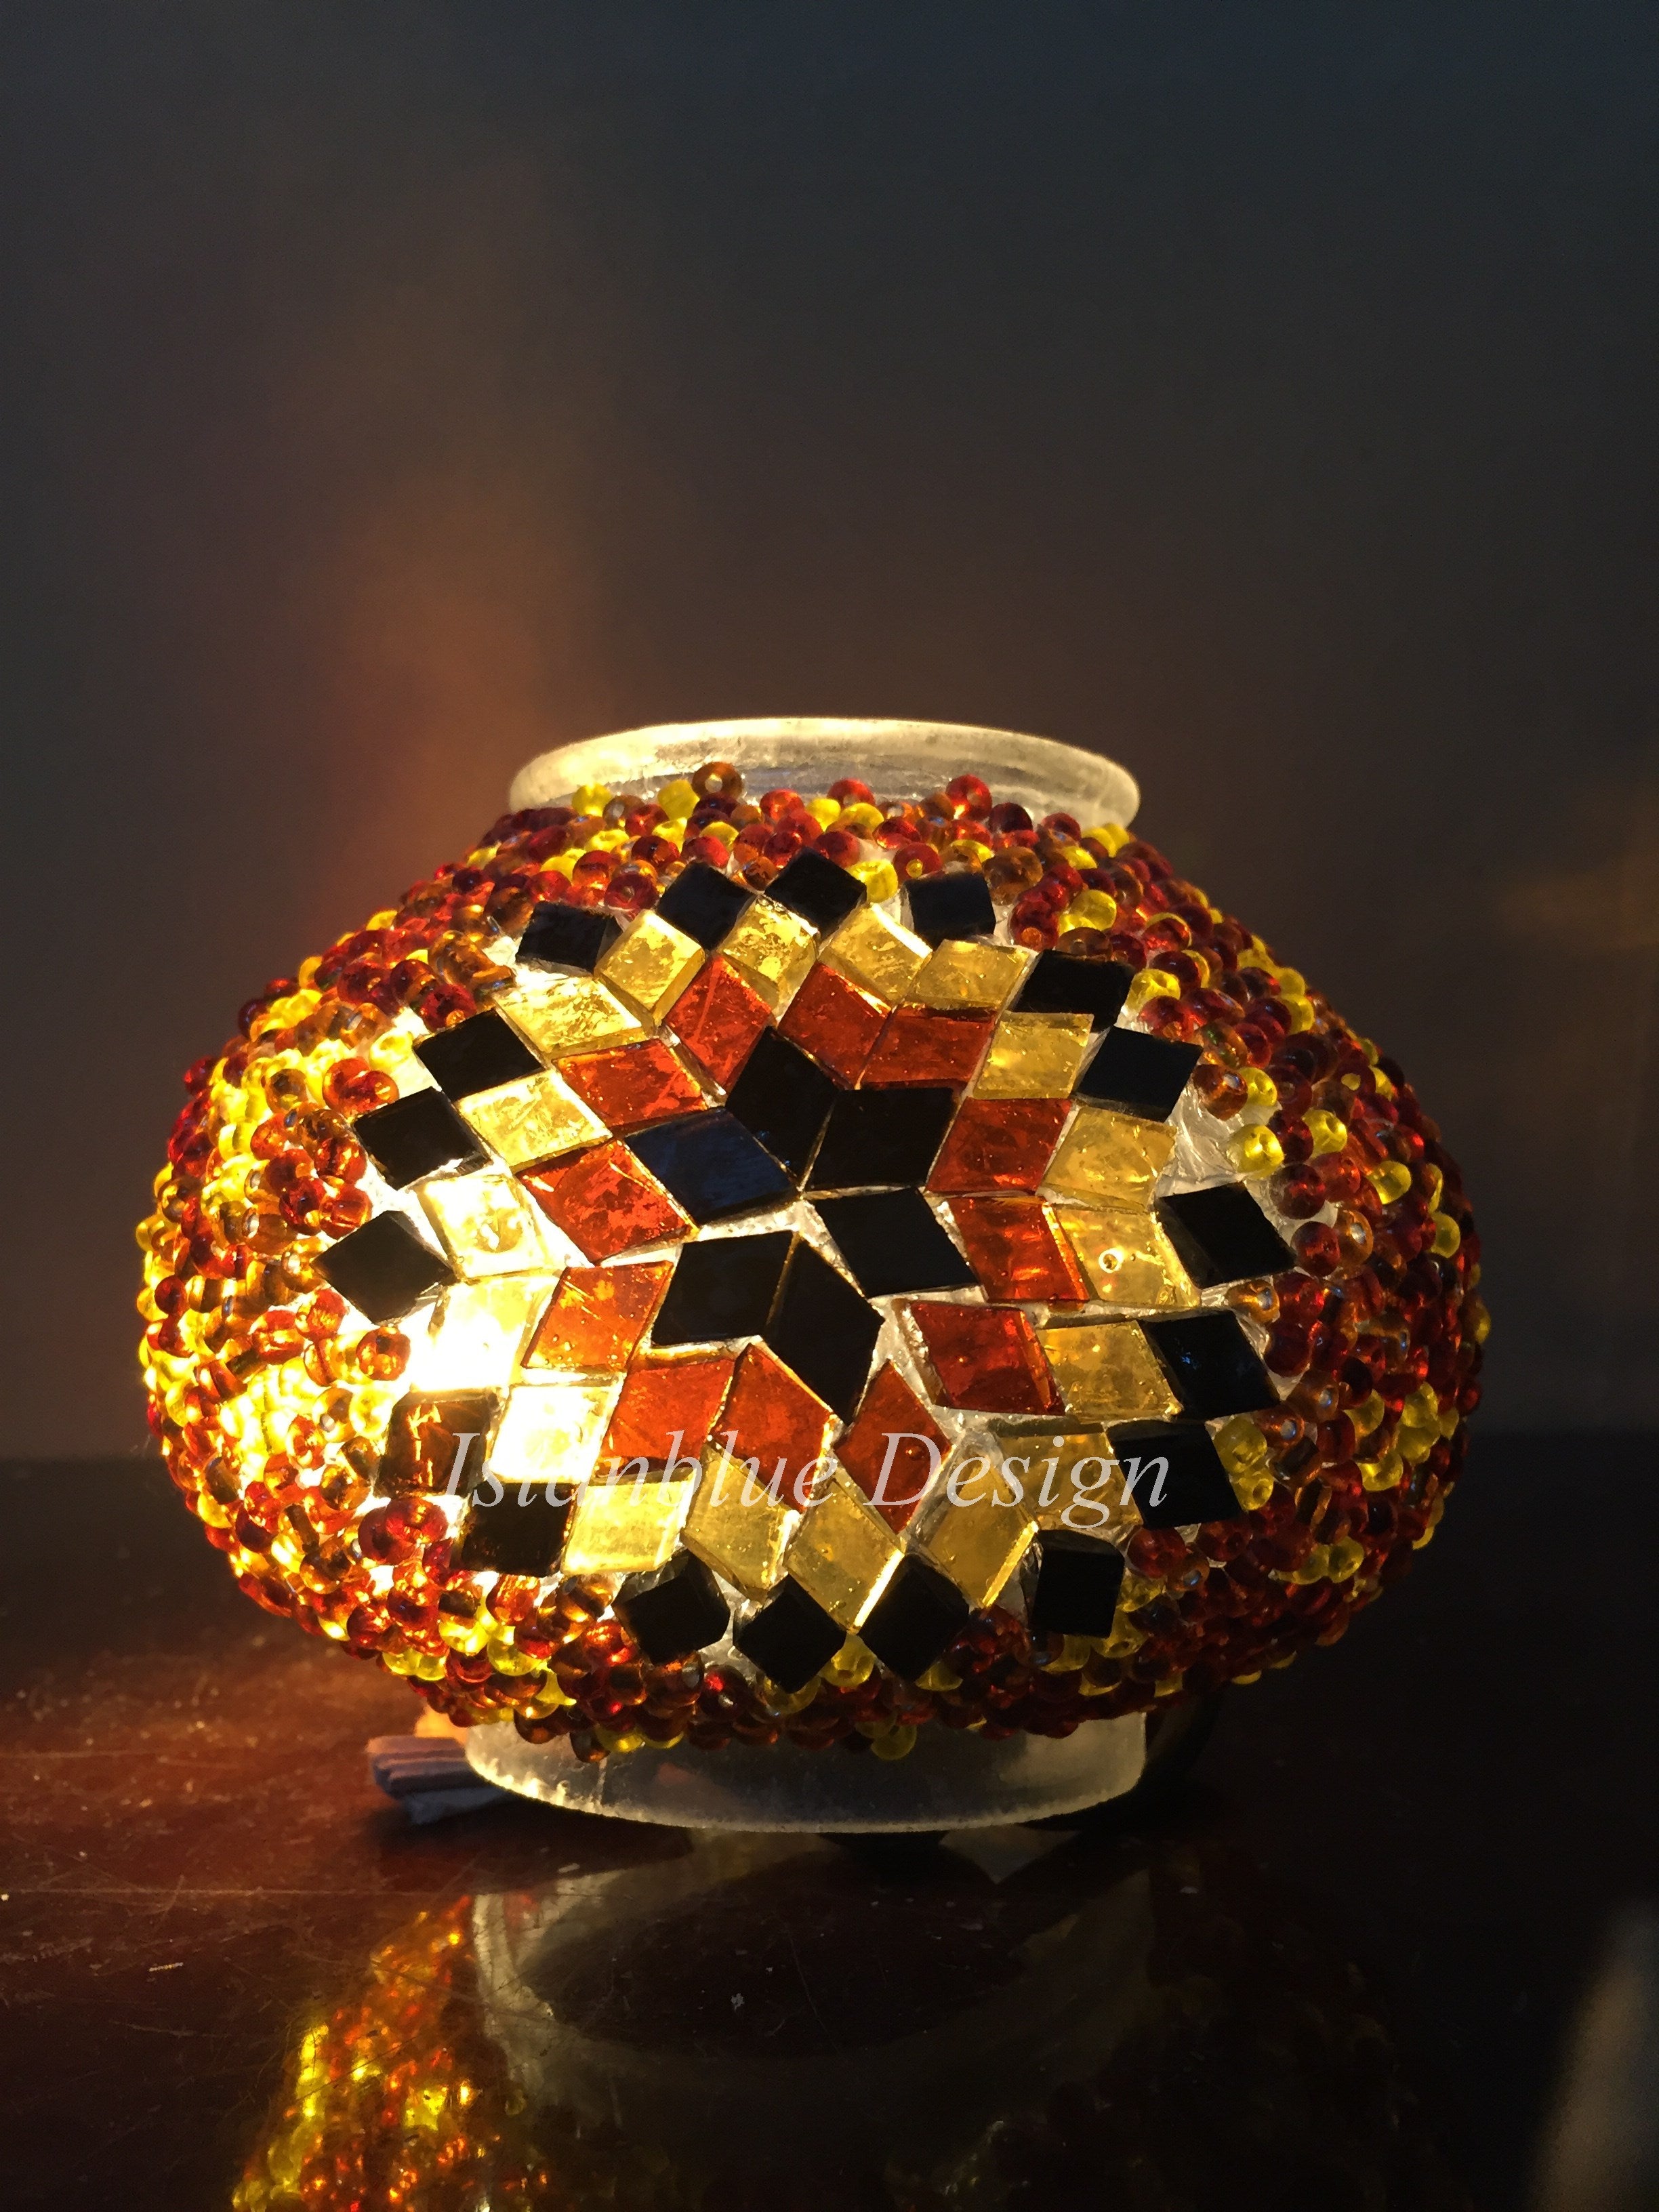 Chocolate Gems - medium size globes